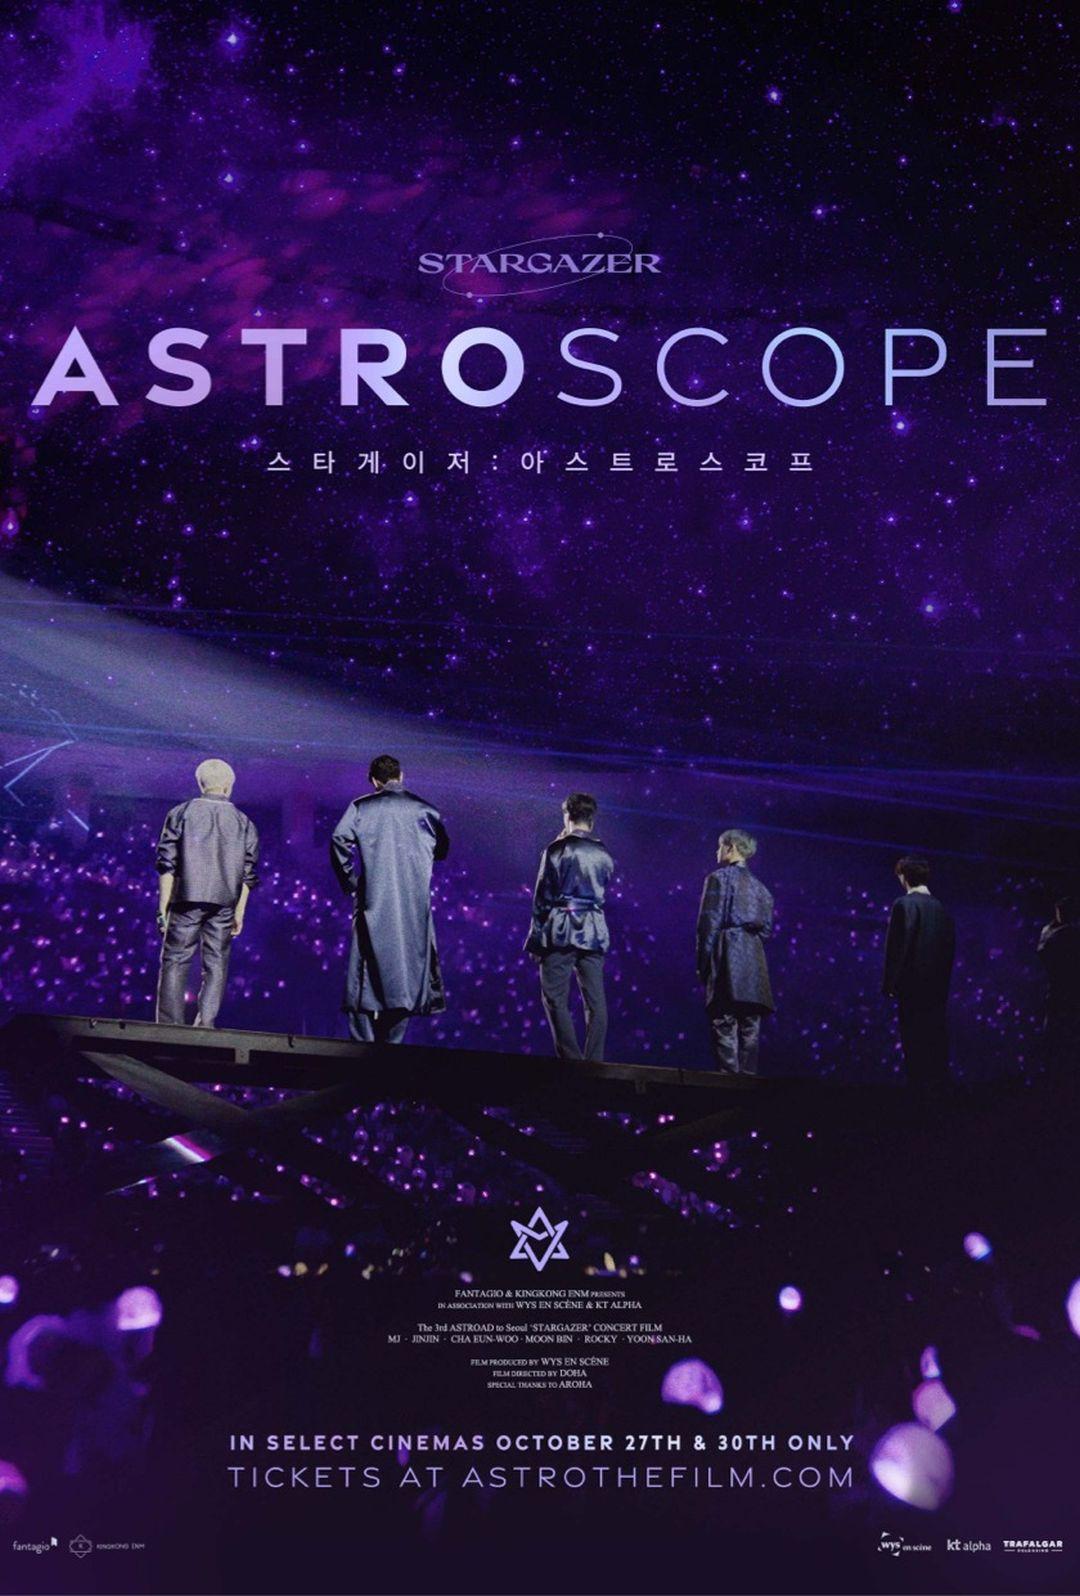 Stargazer:AstroscopeStargazer:Astroscope